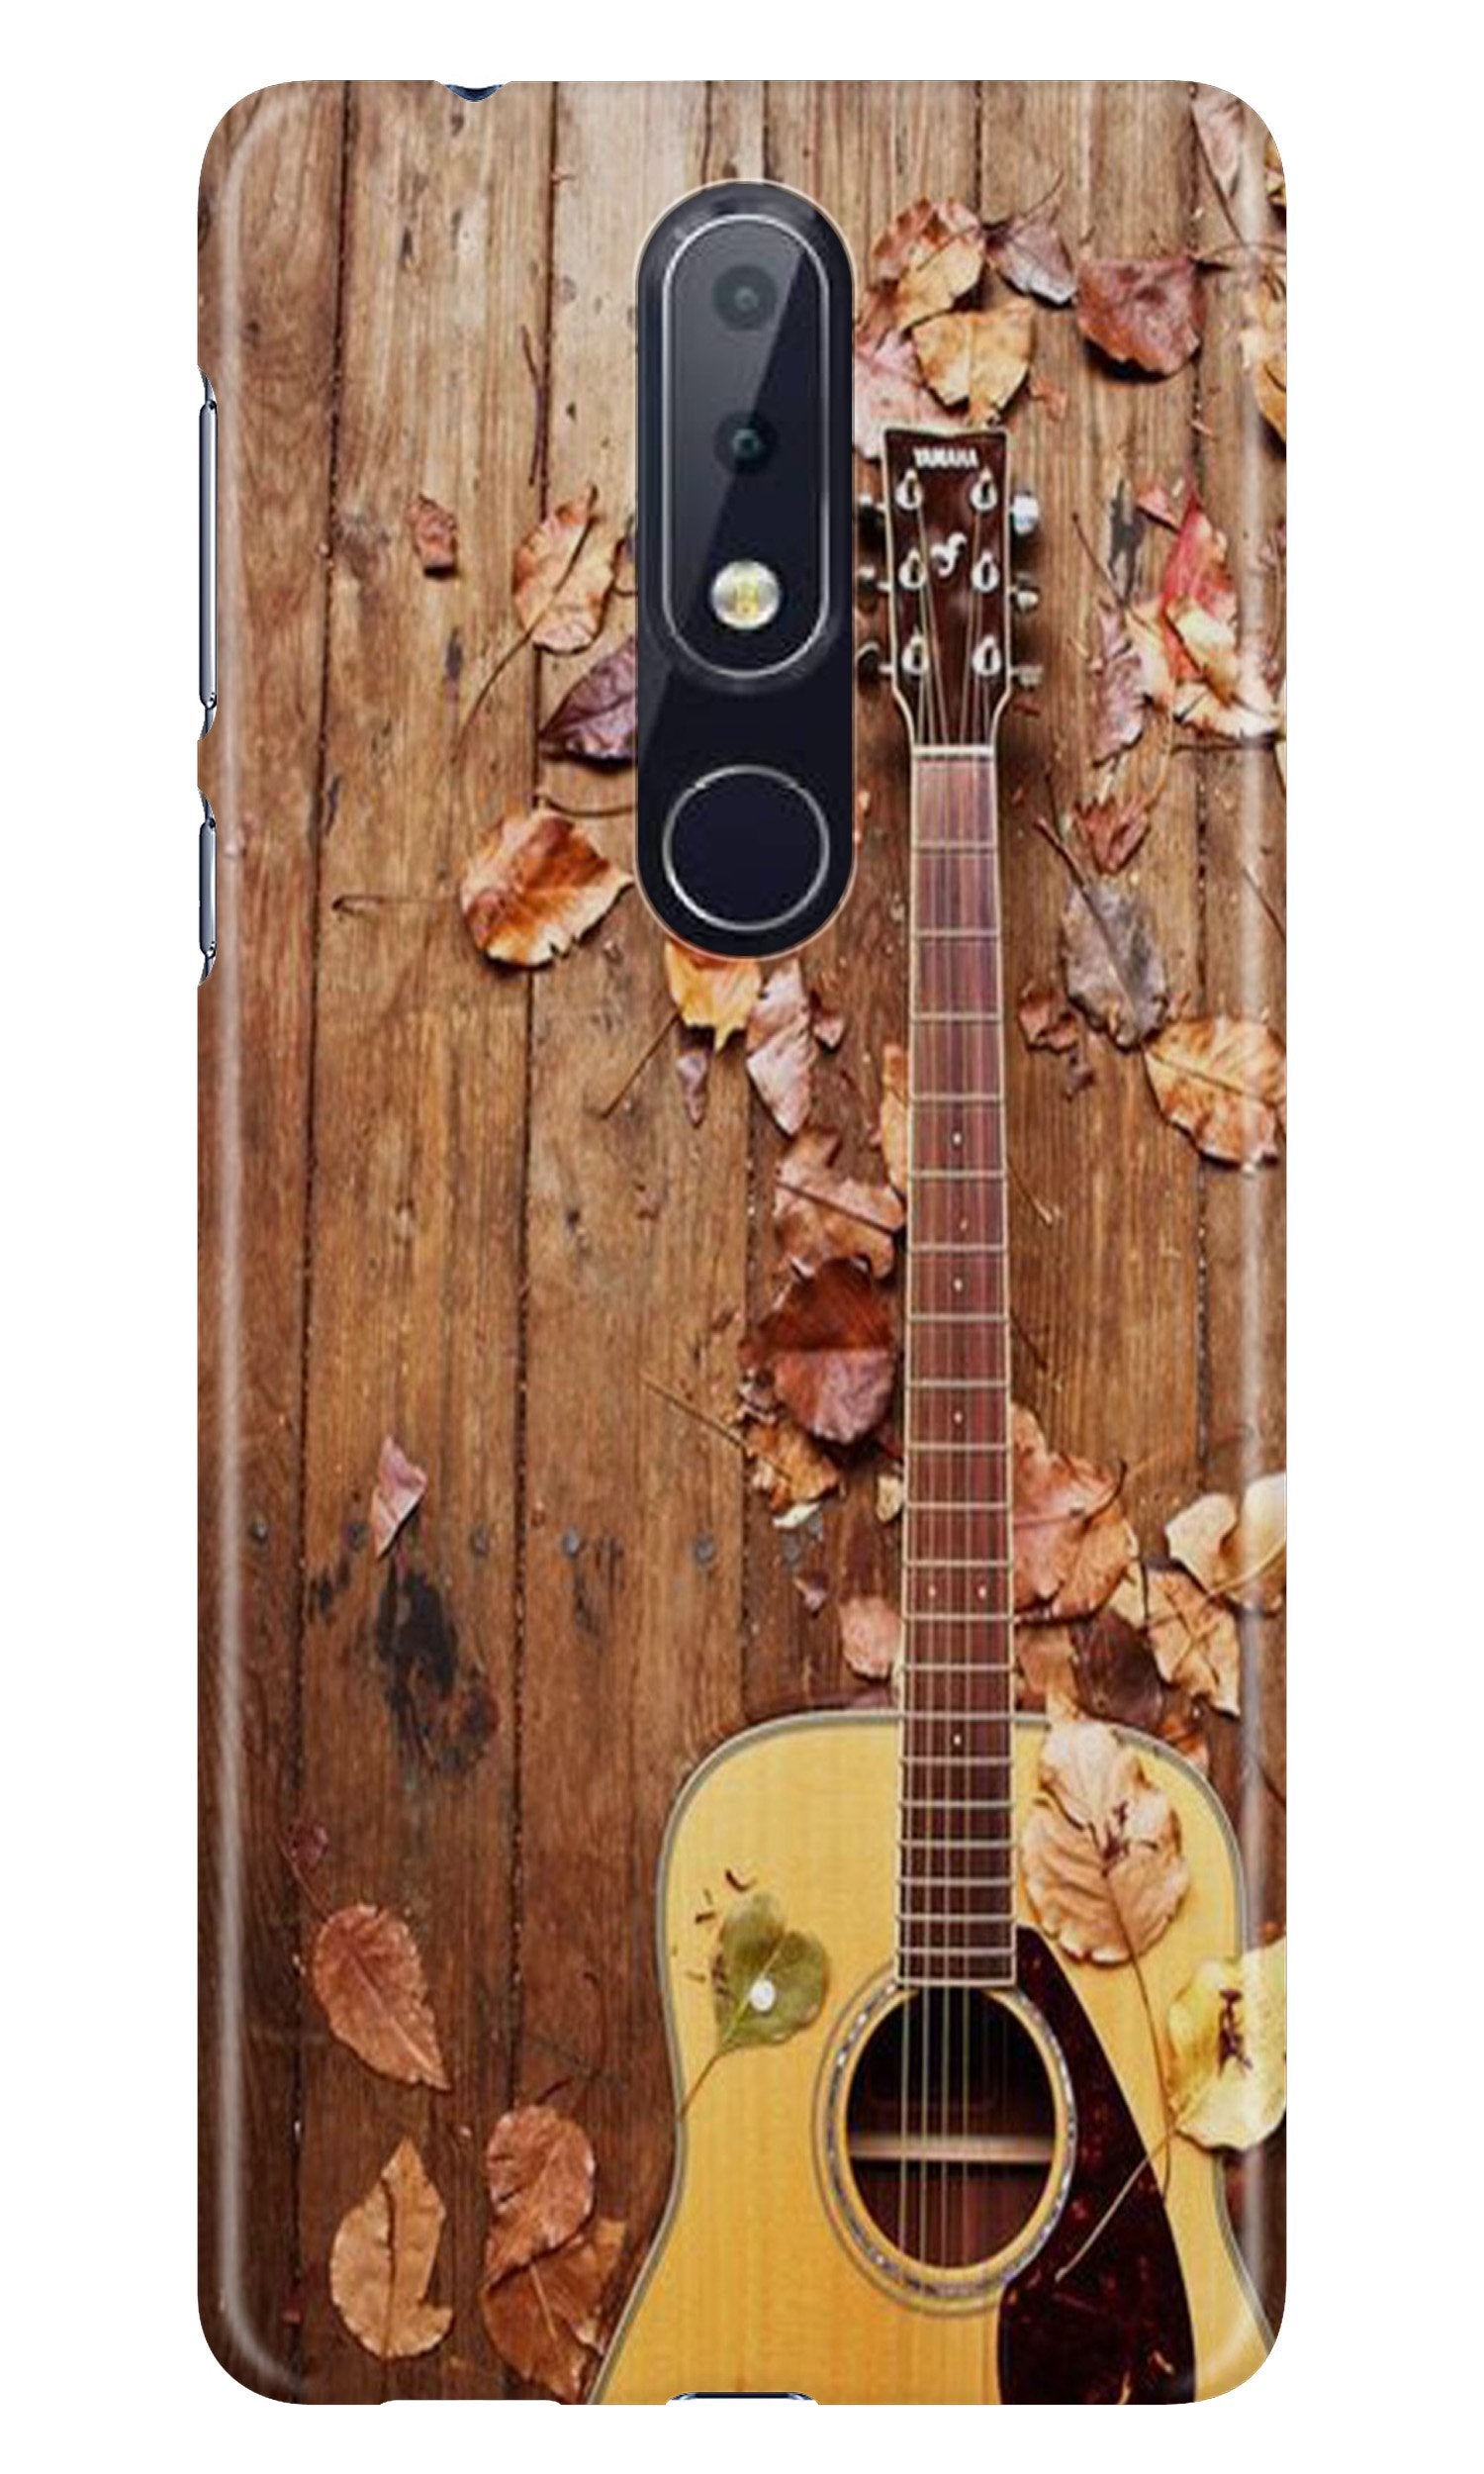 Guitar Case for Nokia 3.2